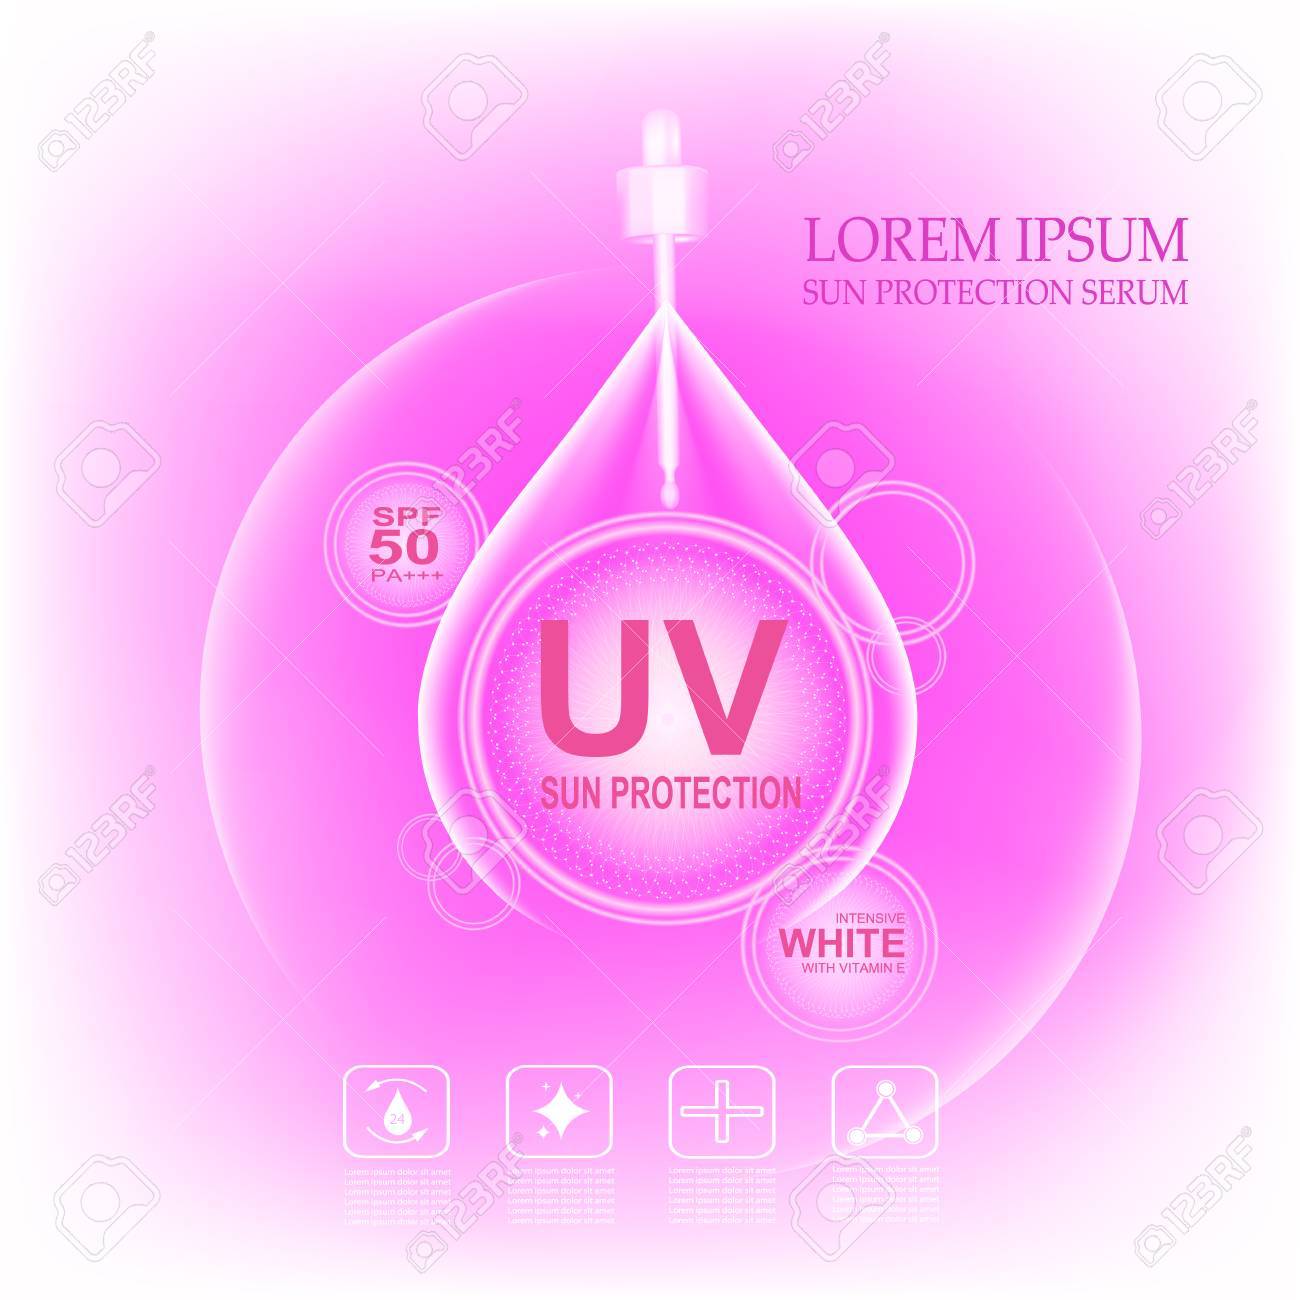 Uv Sun Protection Cream And Whitening Skin Care